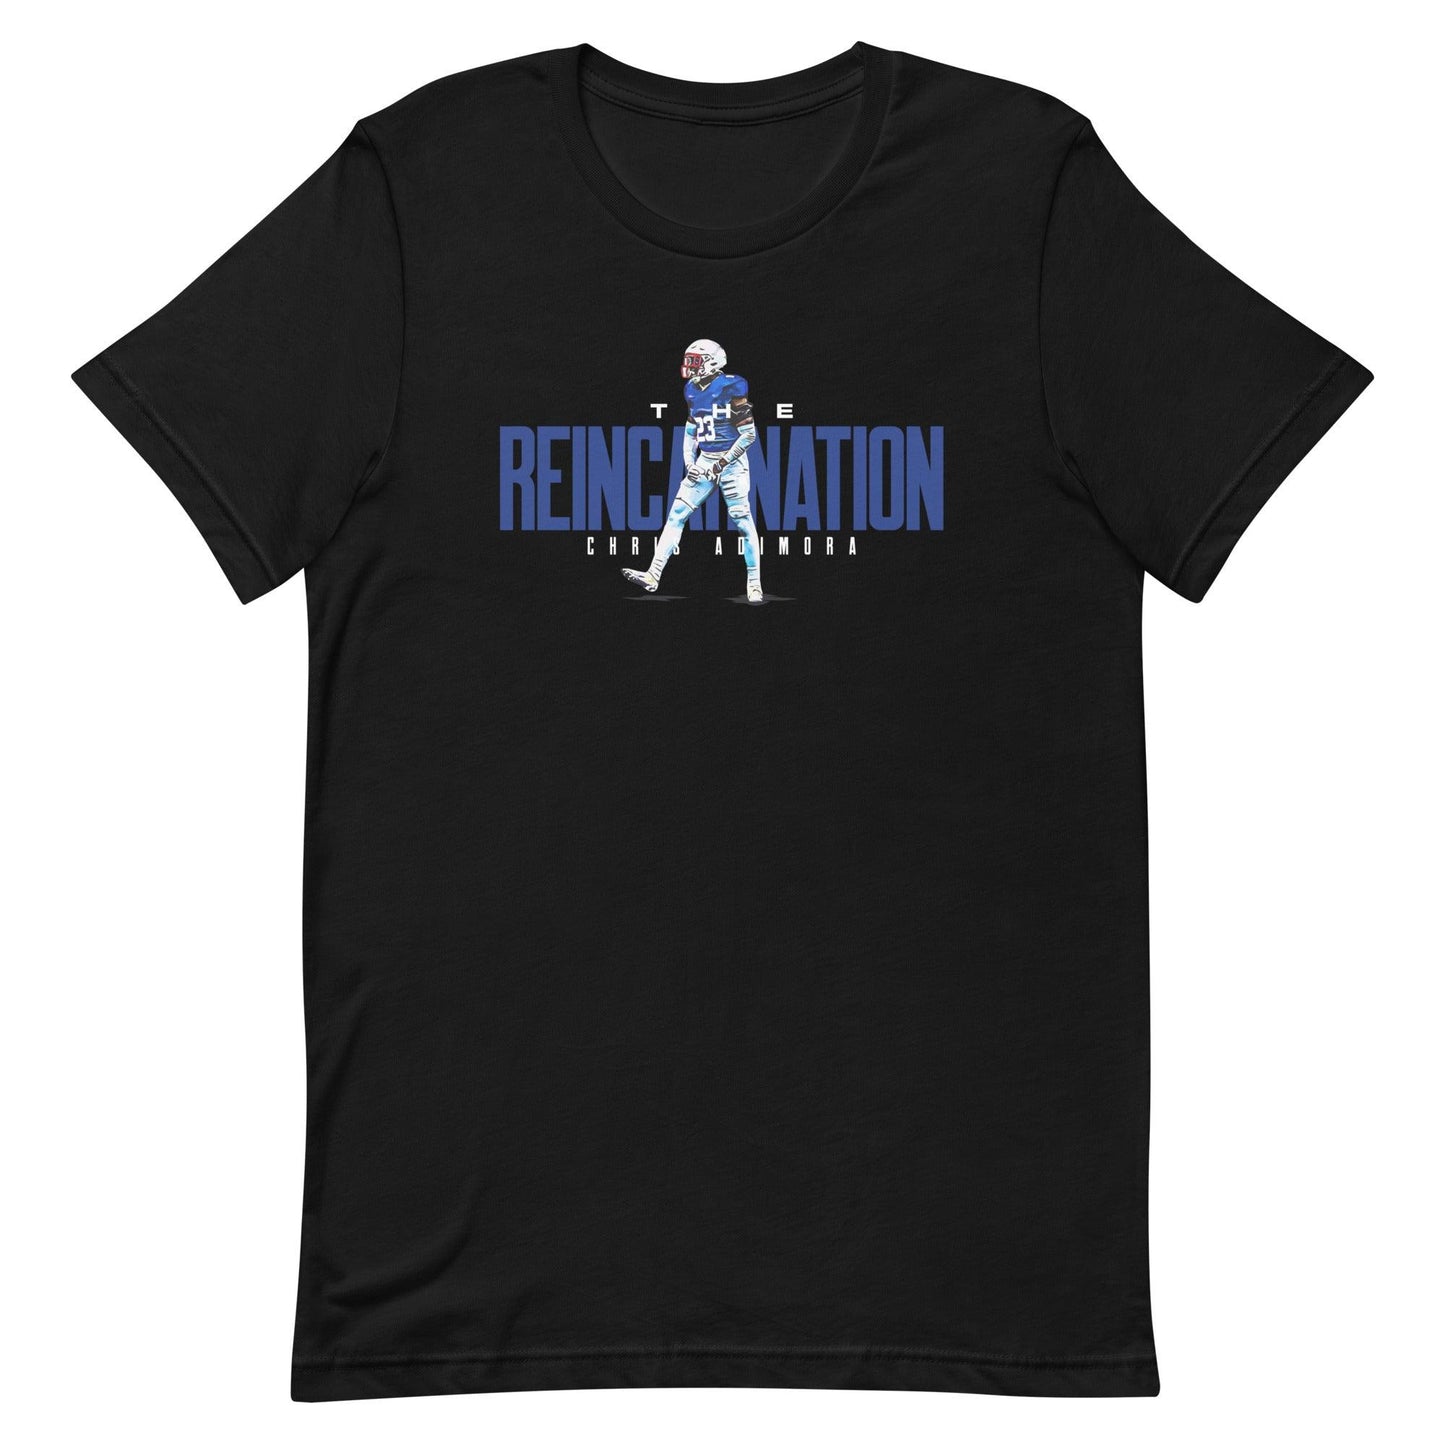 Chris Adimora “reincarnation” t-shirt - Fan Arch